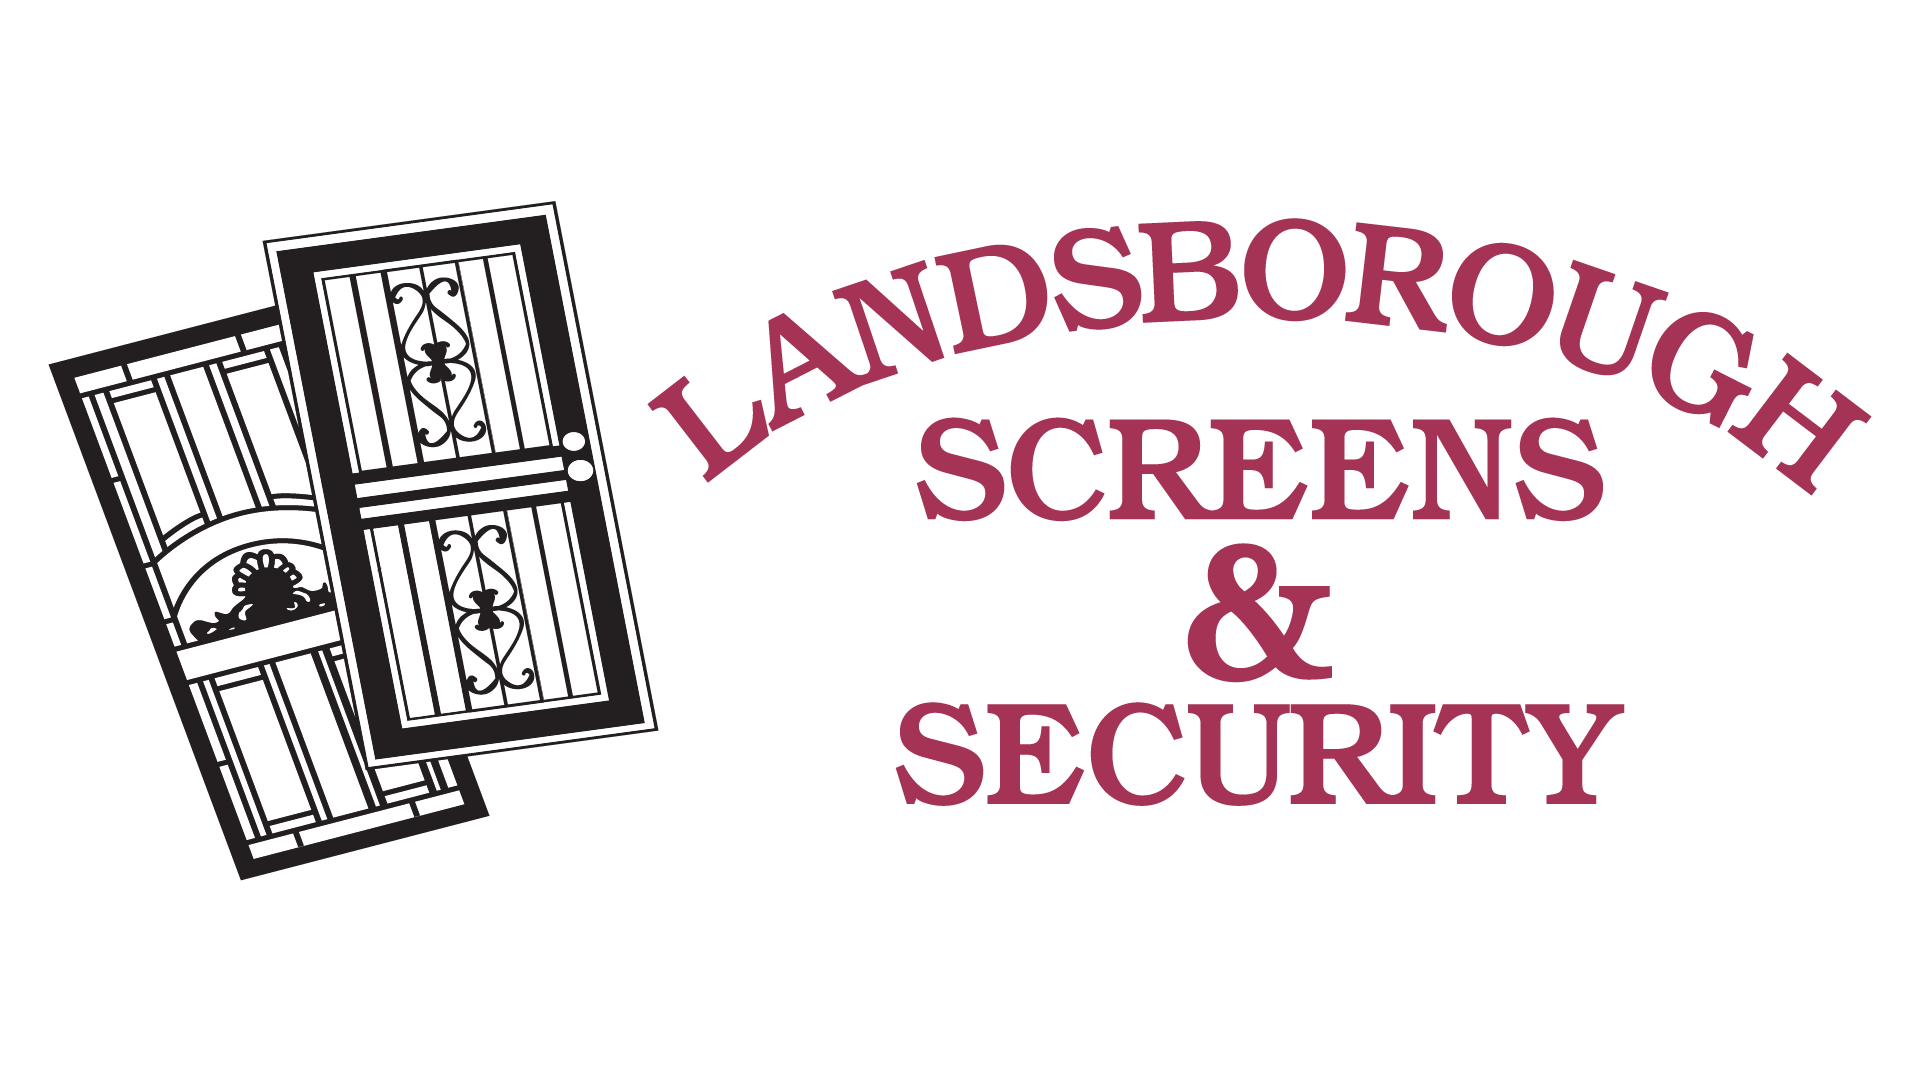 Landsborough Screens and Security Prowler Proof security screen installer